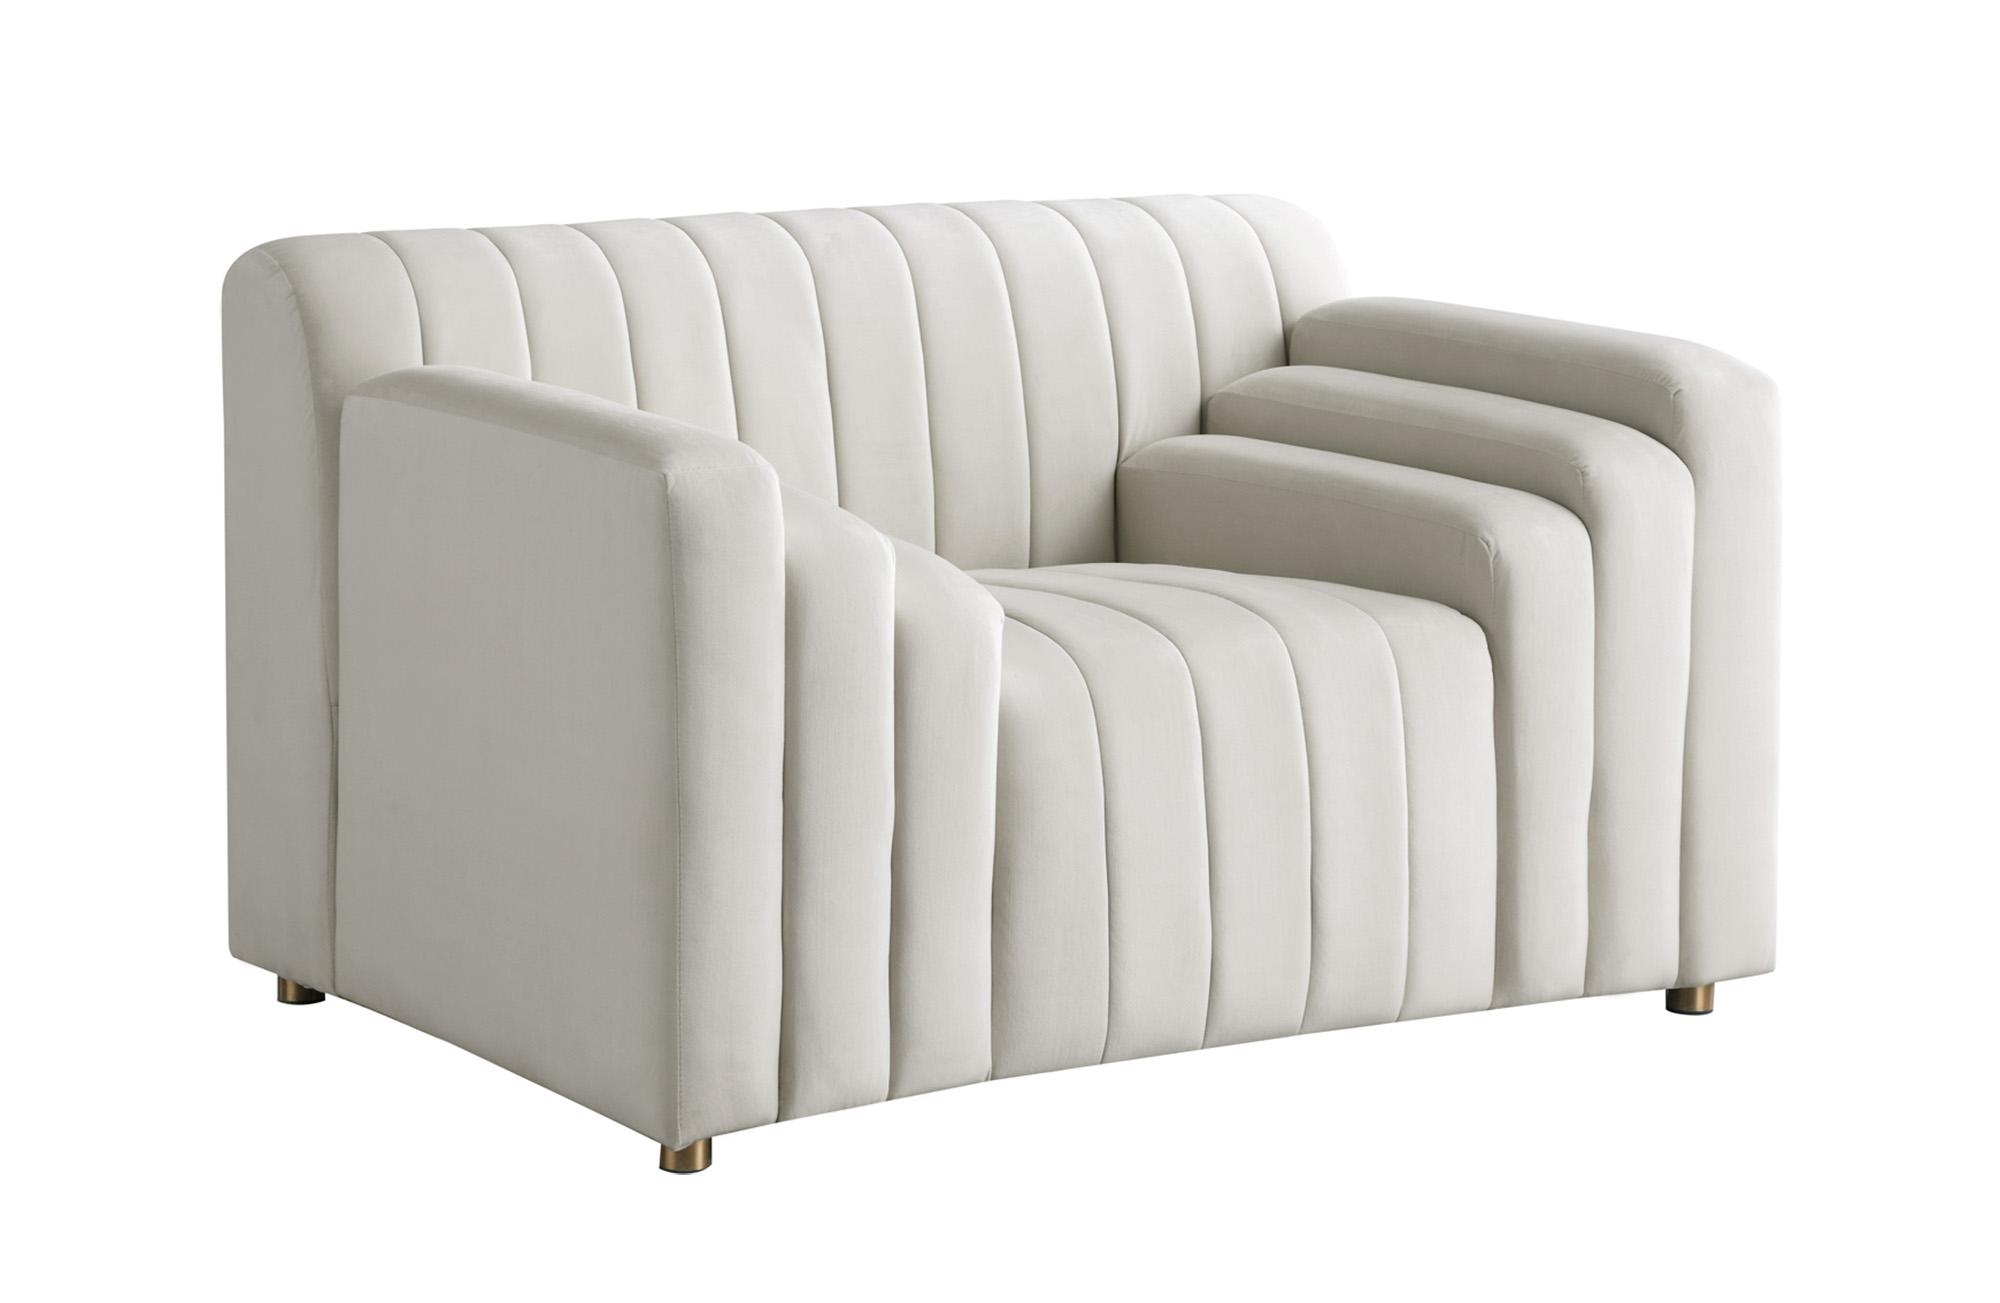 Contemporary, Modern Arm Chair NAYA 637Cream-C 637Cream-C in Cream Velvet